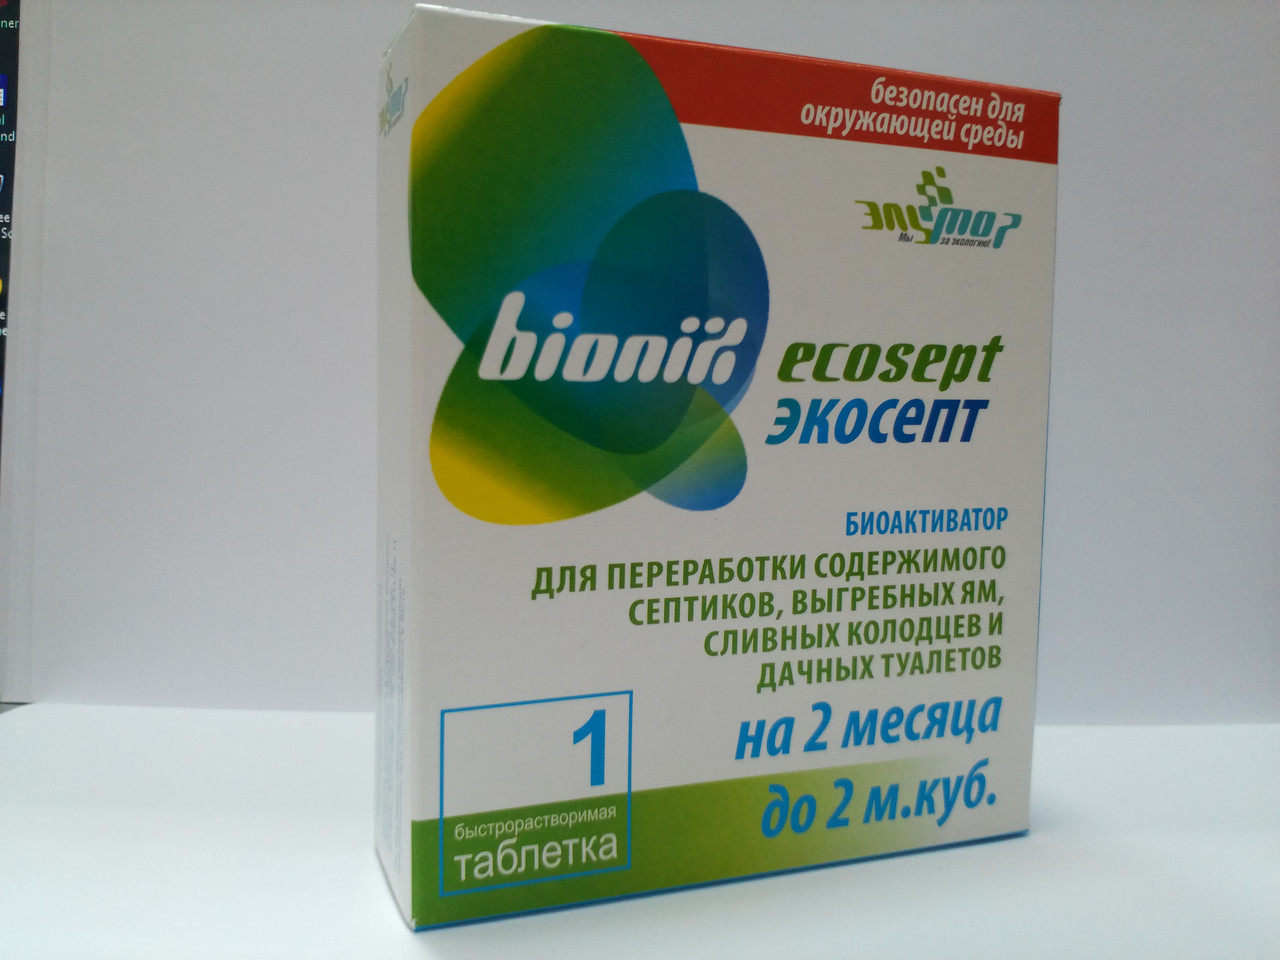 Биопрепарат для выгребных ям на 2 месяца на 2 куб. м. Канада, Bionix EcoSept